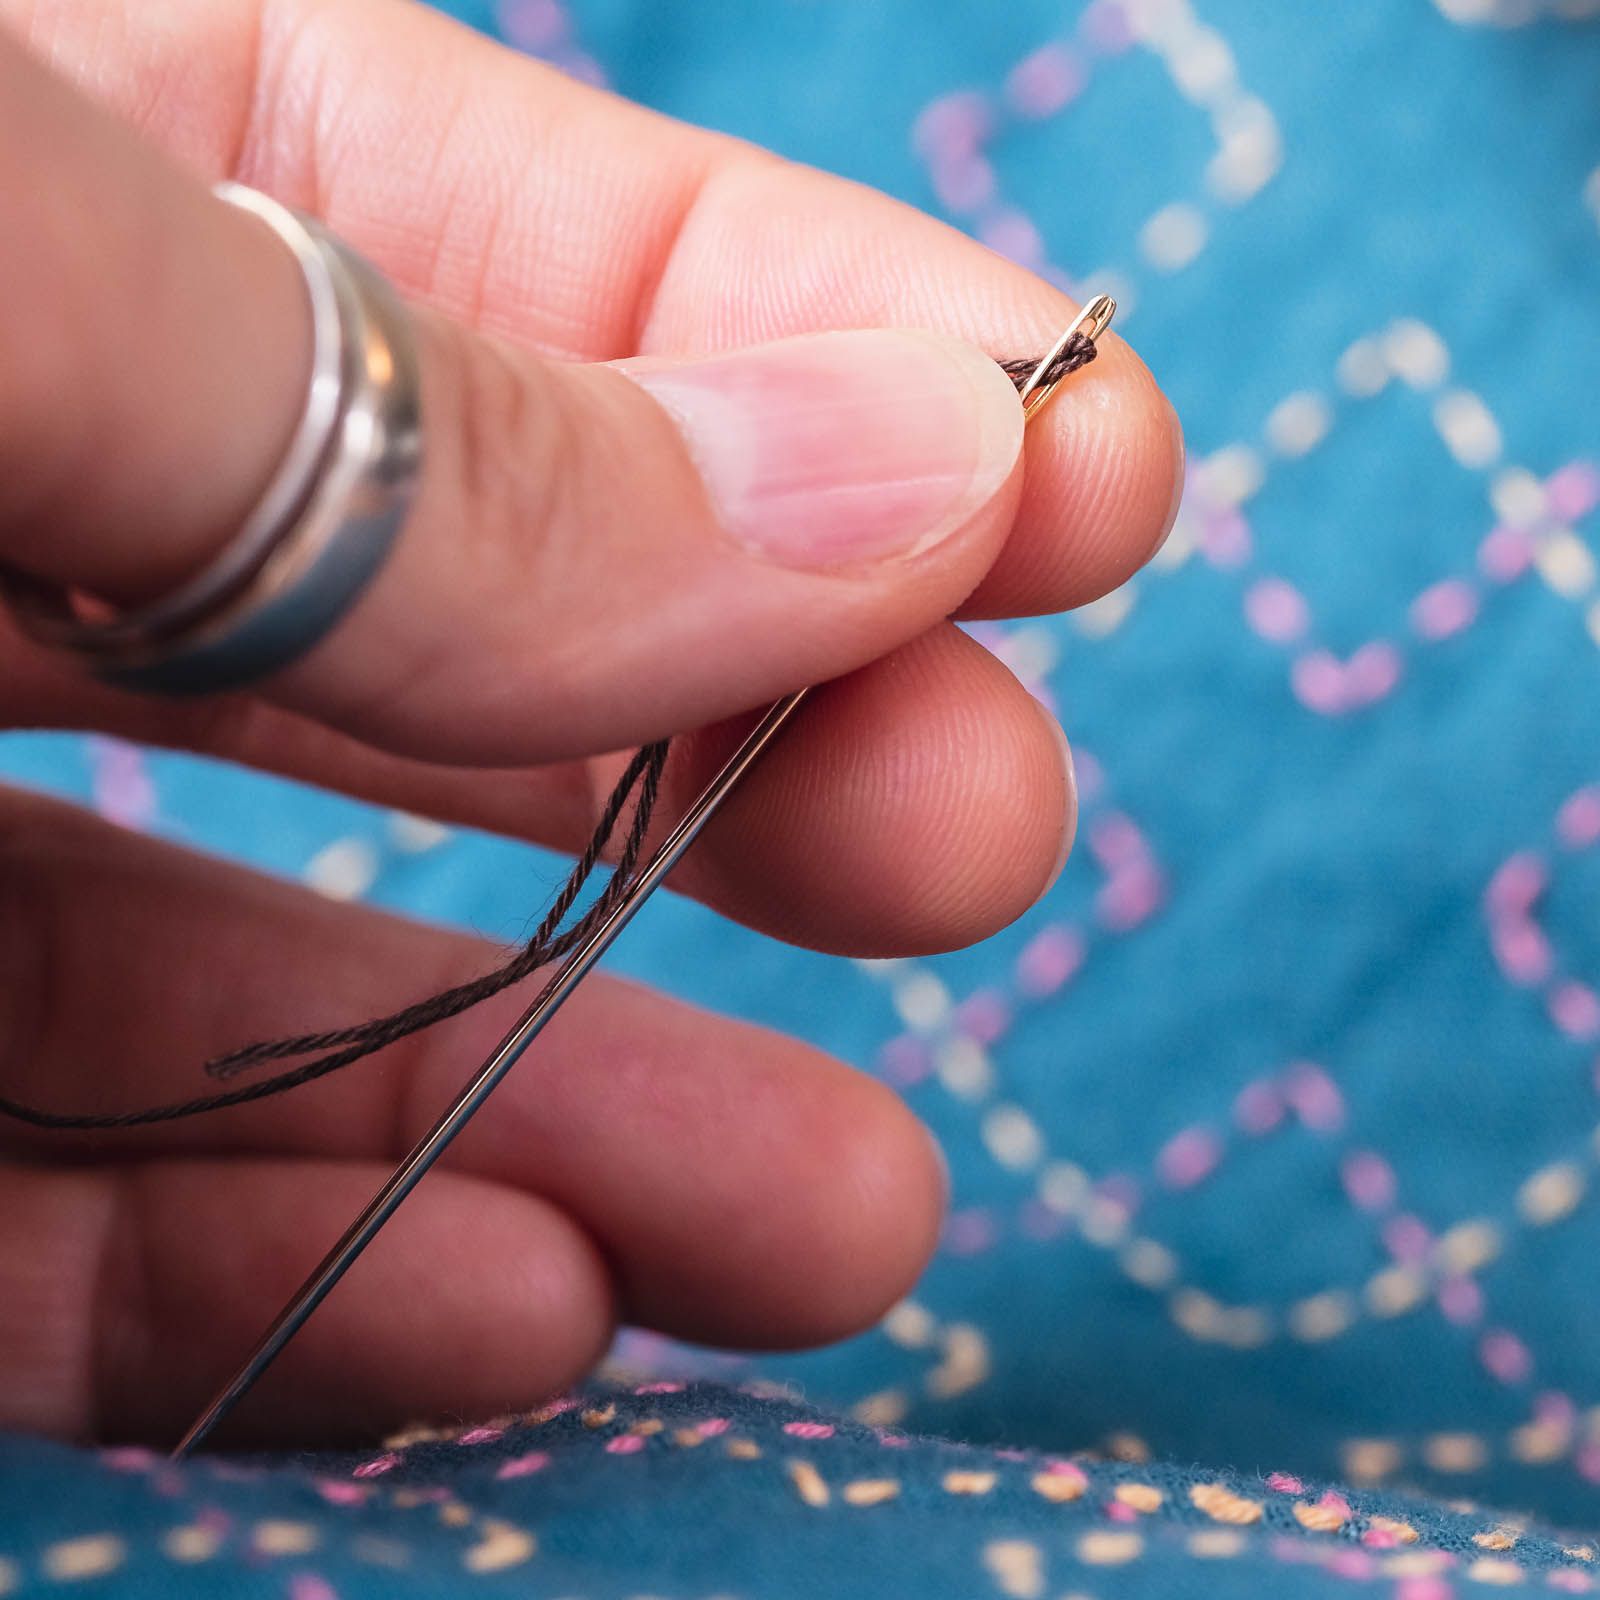 Hand holding a needle with a loop of sashiko thread peeking through the needle's eye